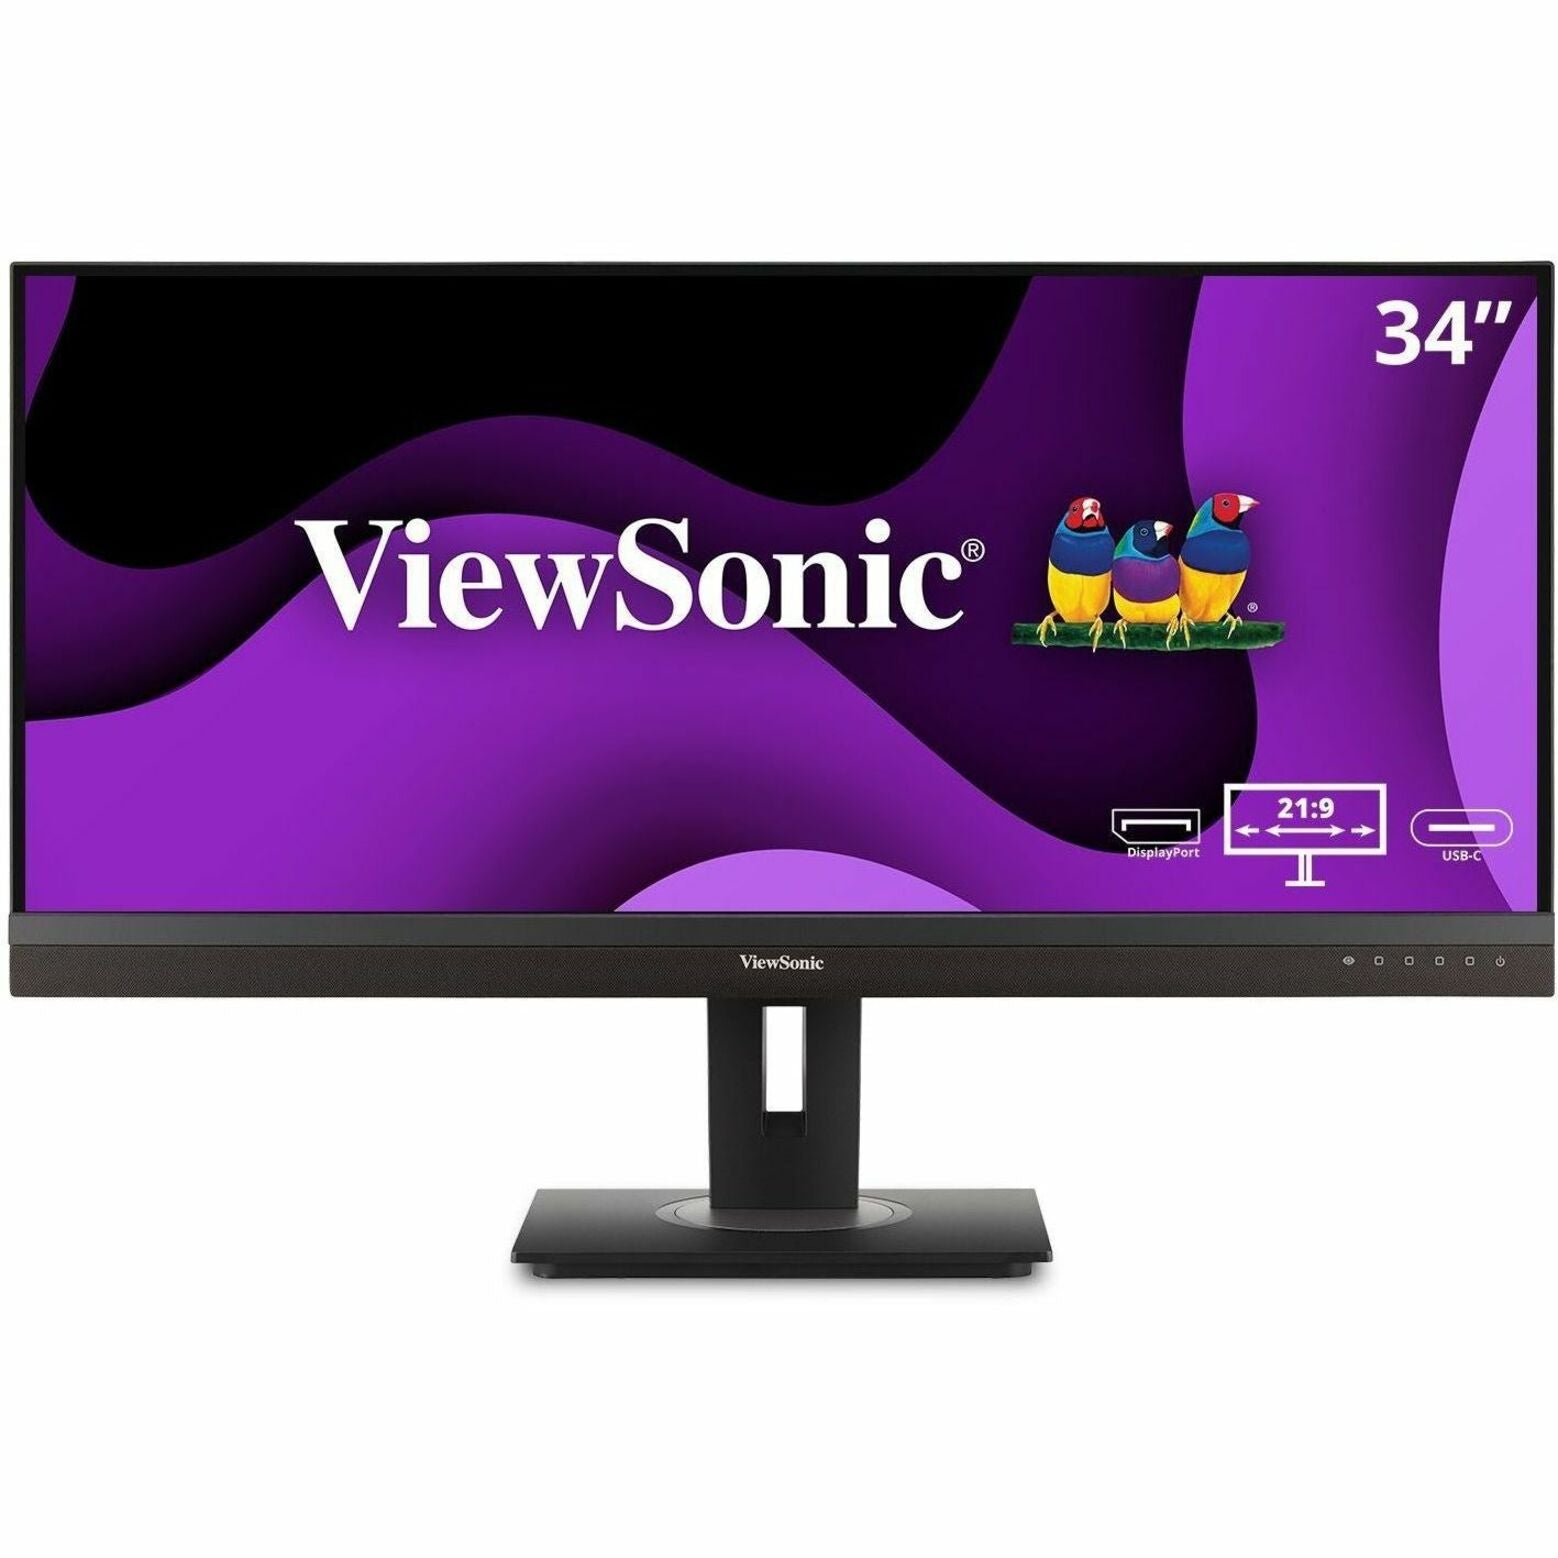 ViewSonic VG3456A 34 IPS LCD WQHD Monitor (HDMI, DP, and USB-C), 300 Nit Brightness, 16.7 Million Colors